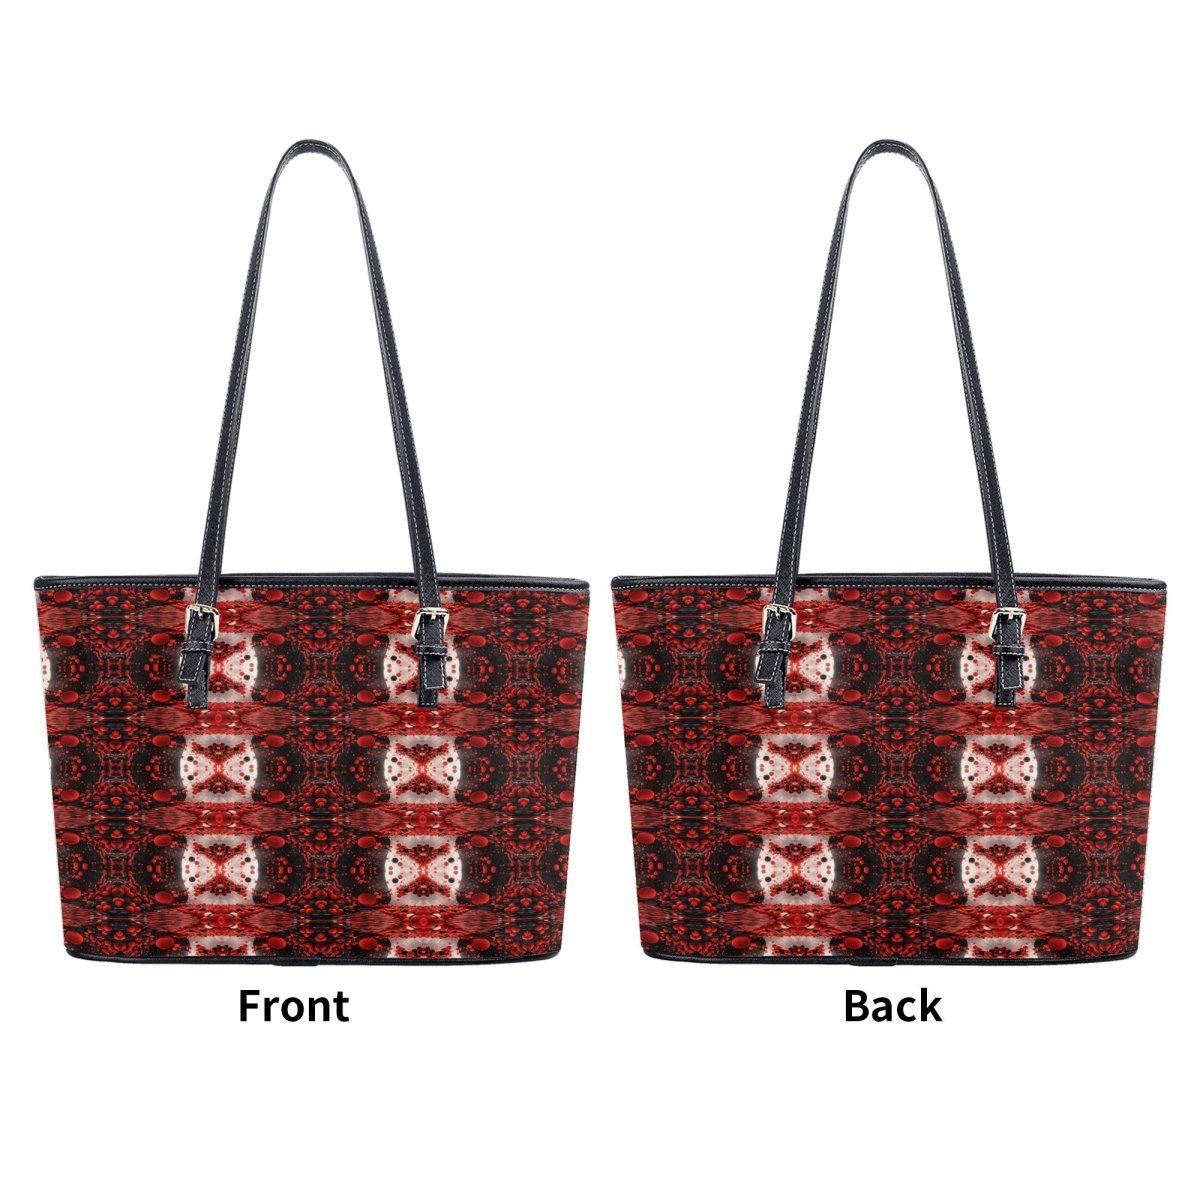 Fashion Red, Black and White Tote Bag - Iron Phoenix GHG